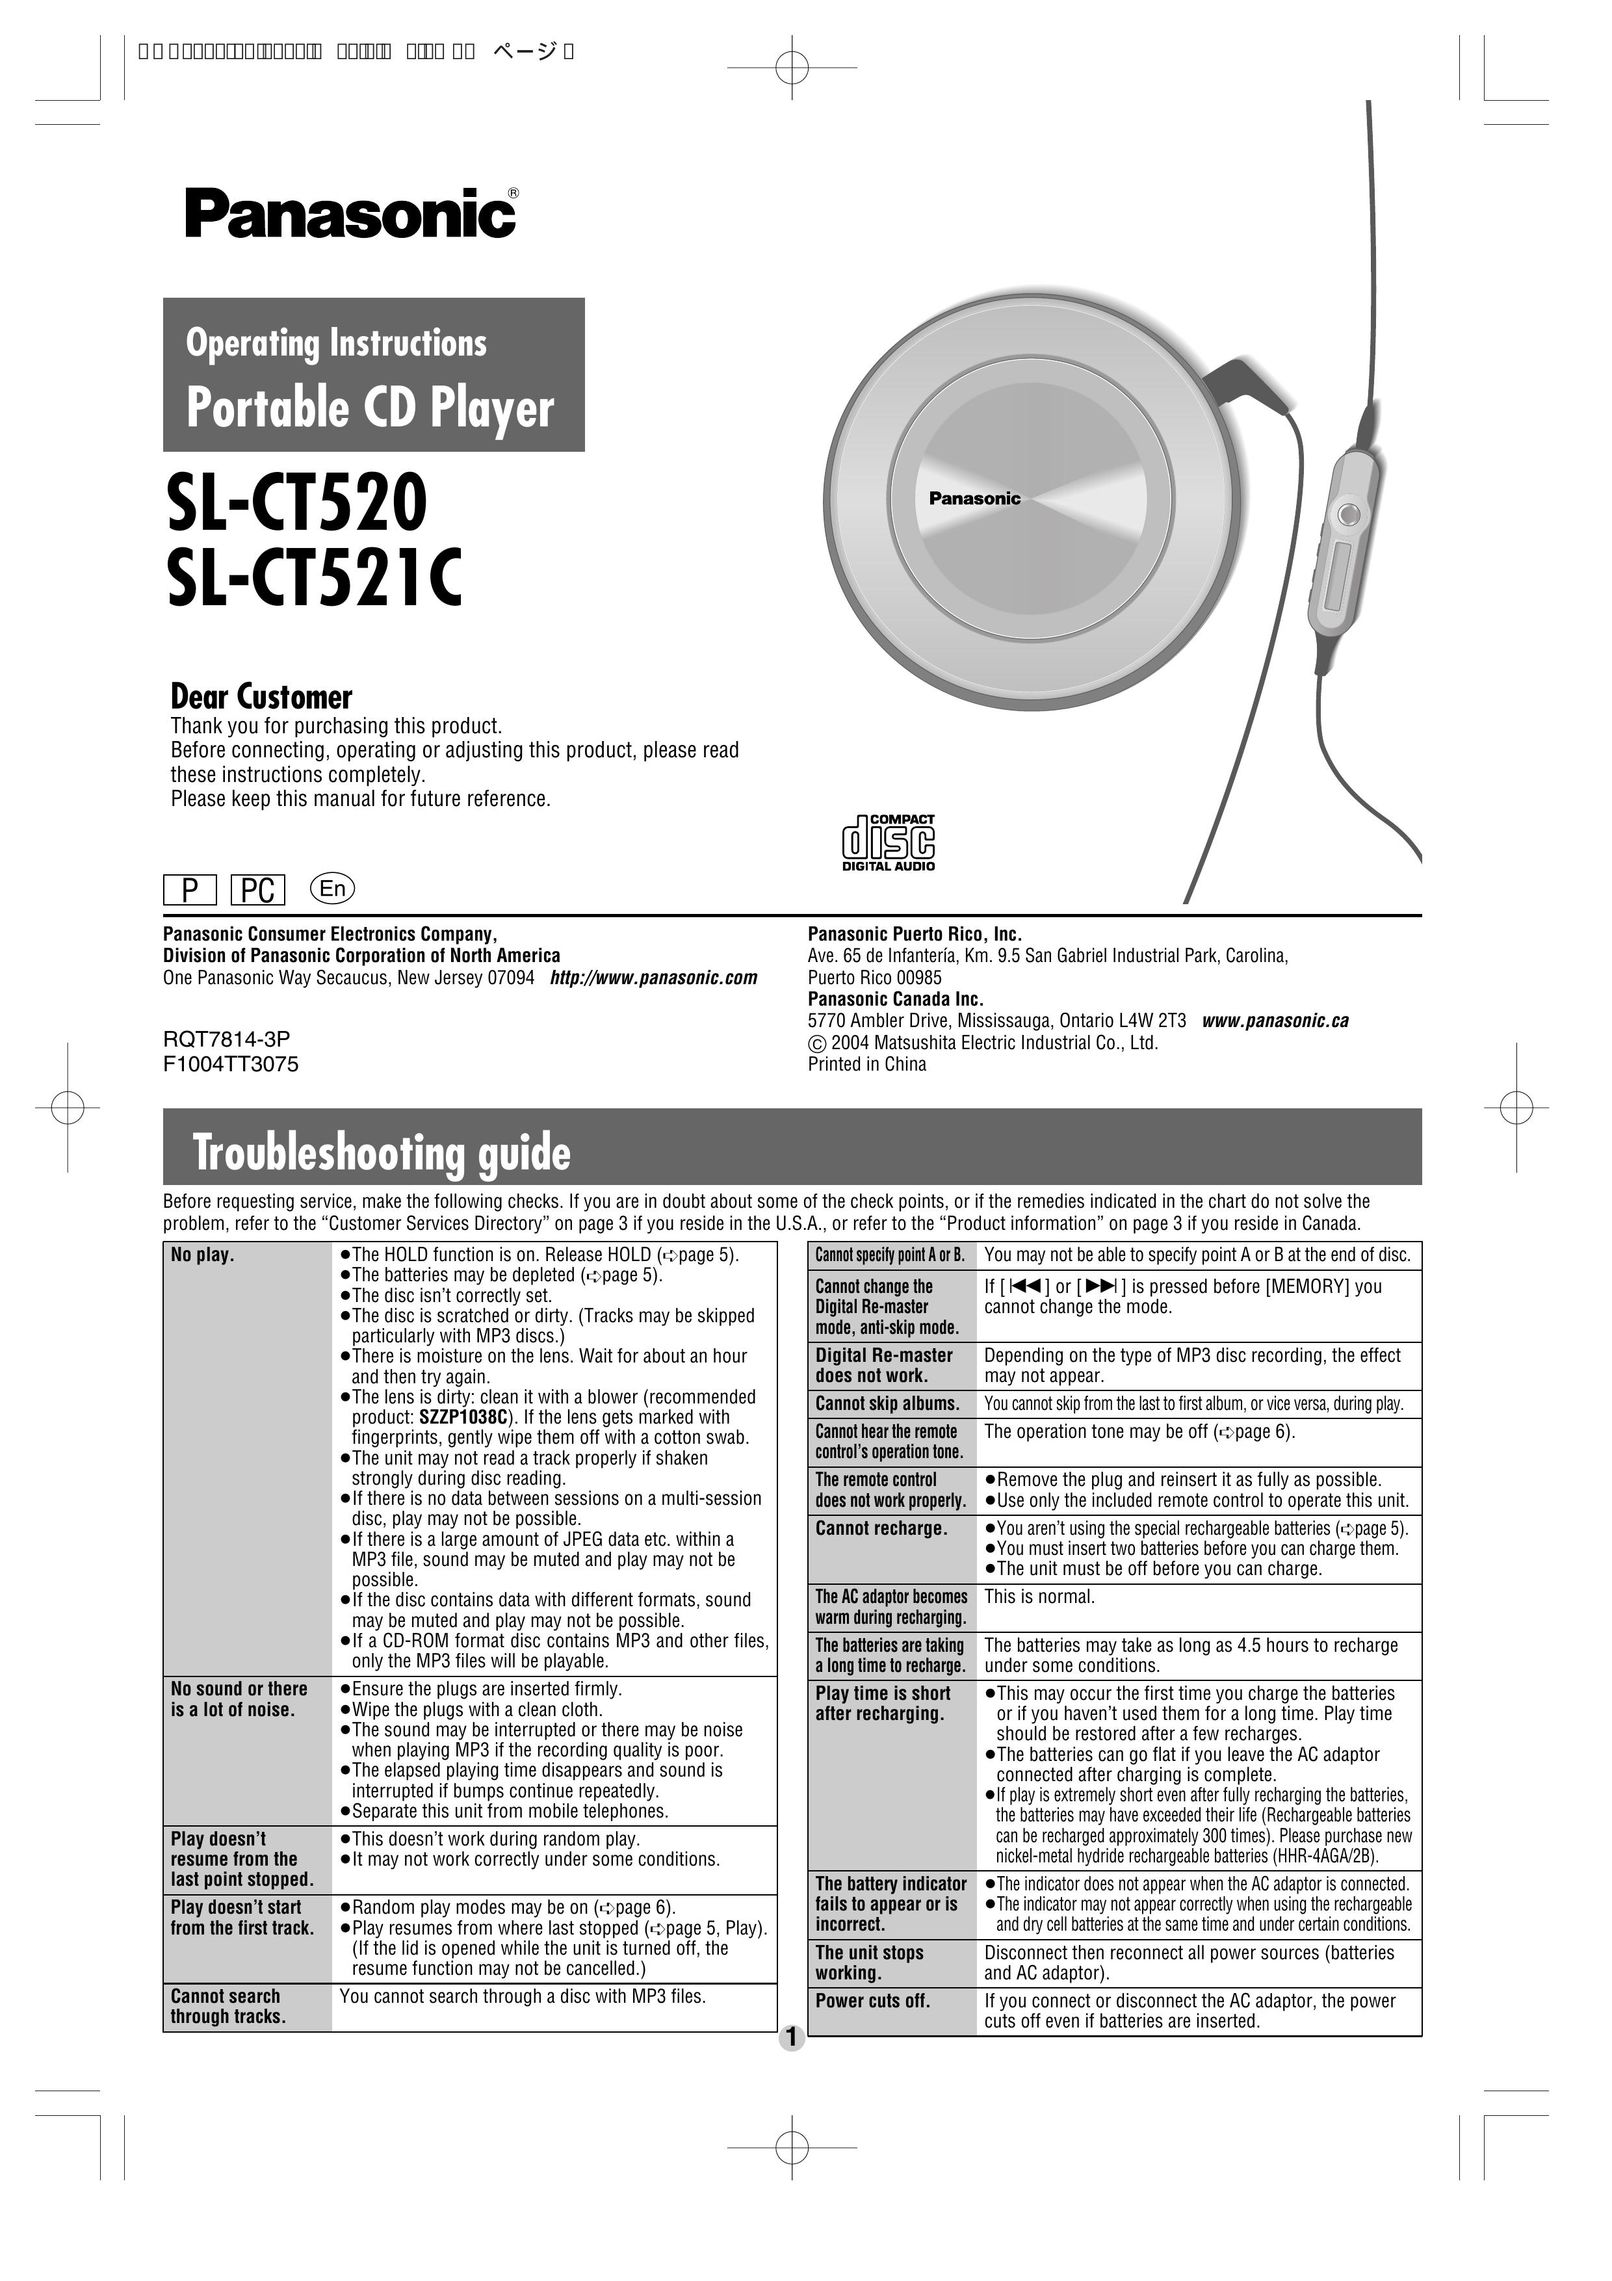 Panasonic SL-CT521C Portable CD Player User Manual